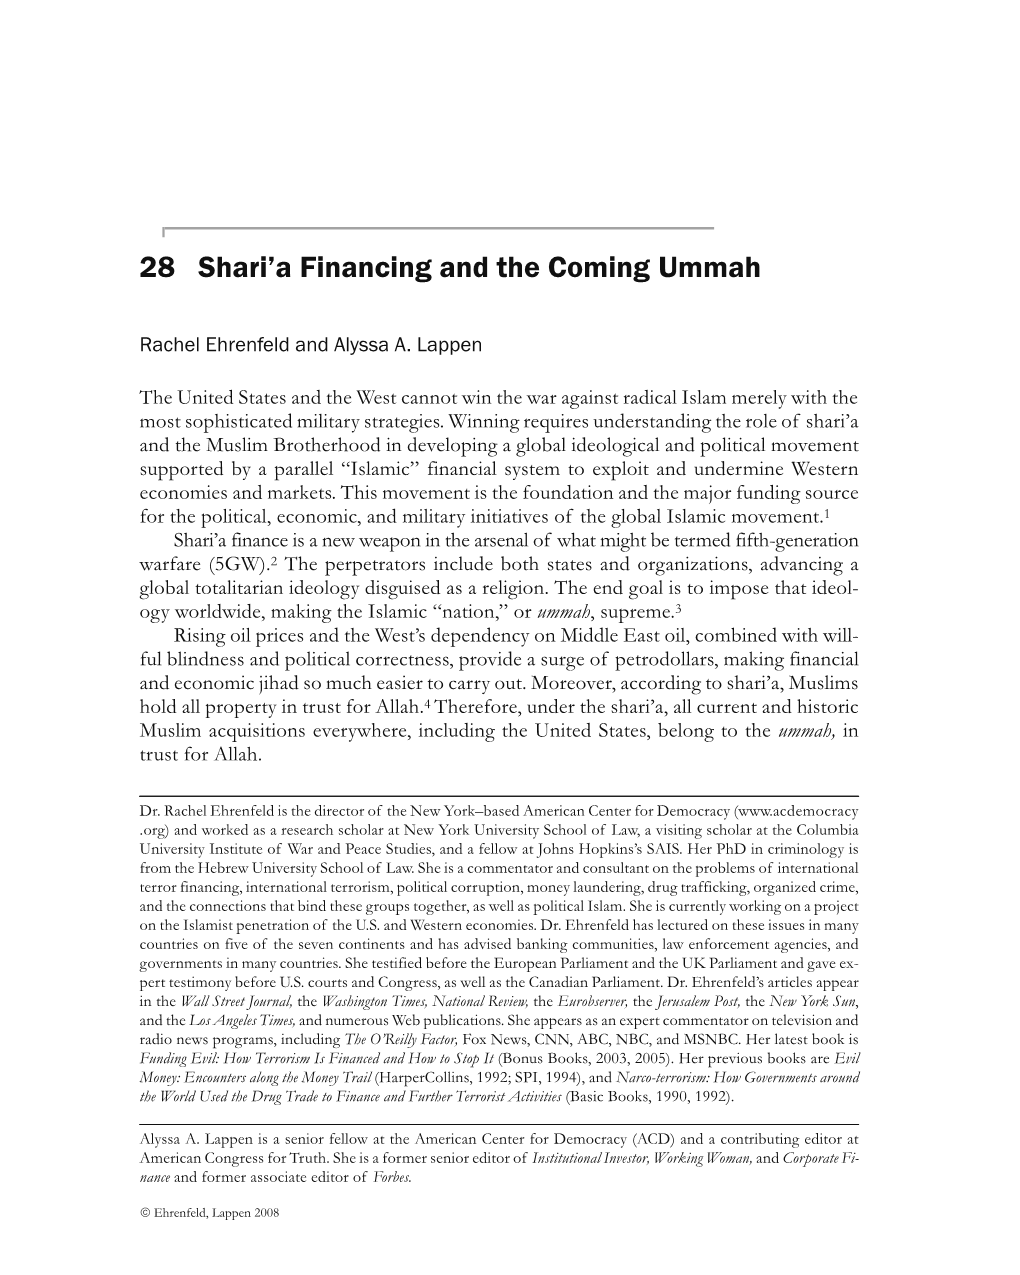 Chapter 28: Shari'a Financing and the Coming Ummah